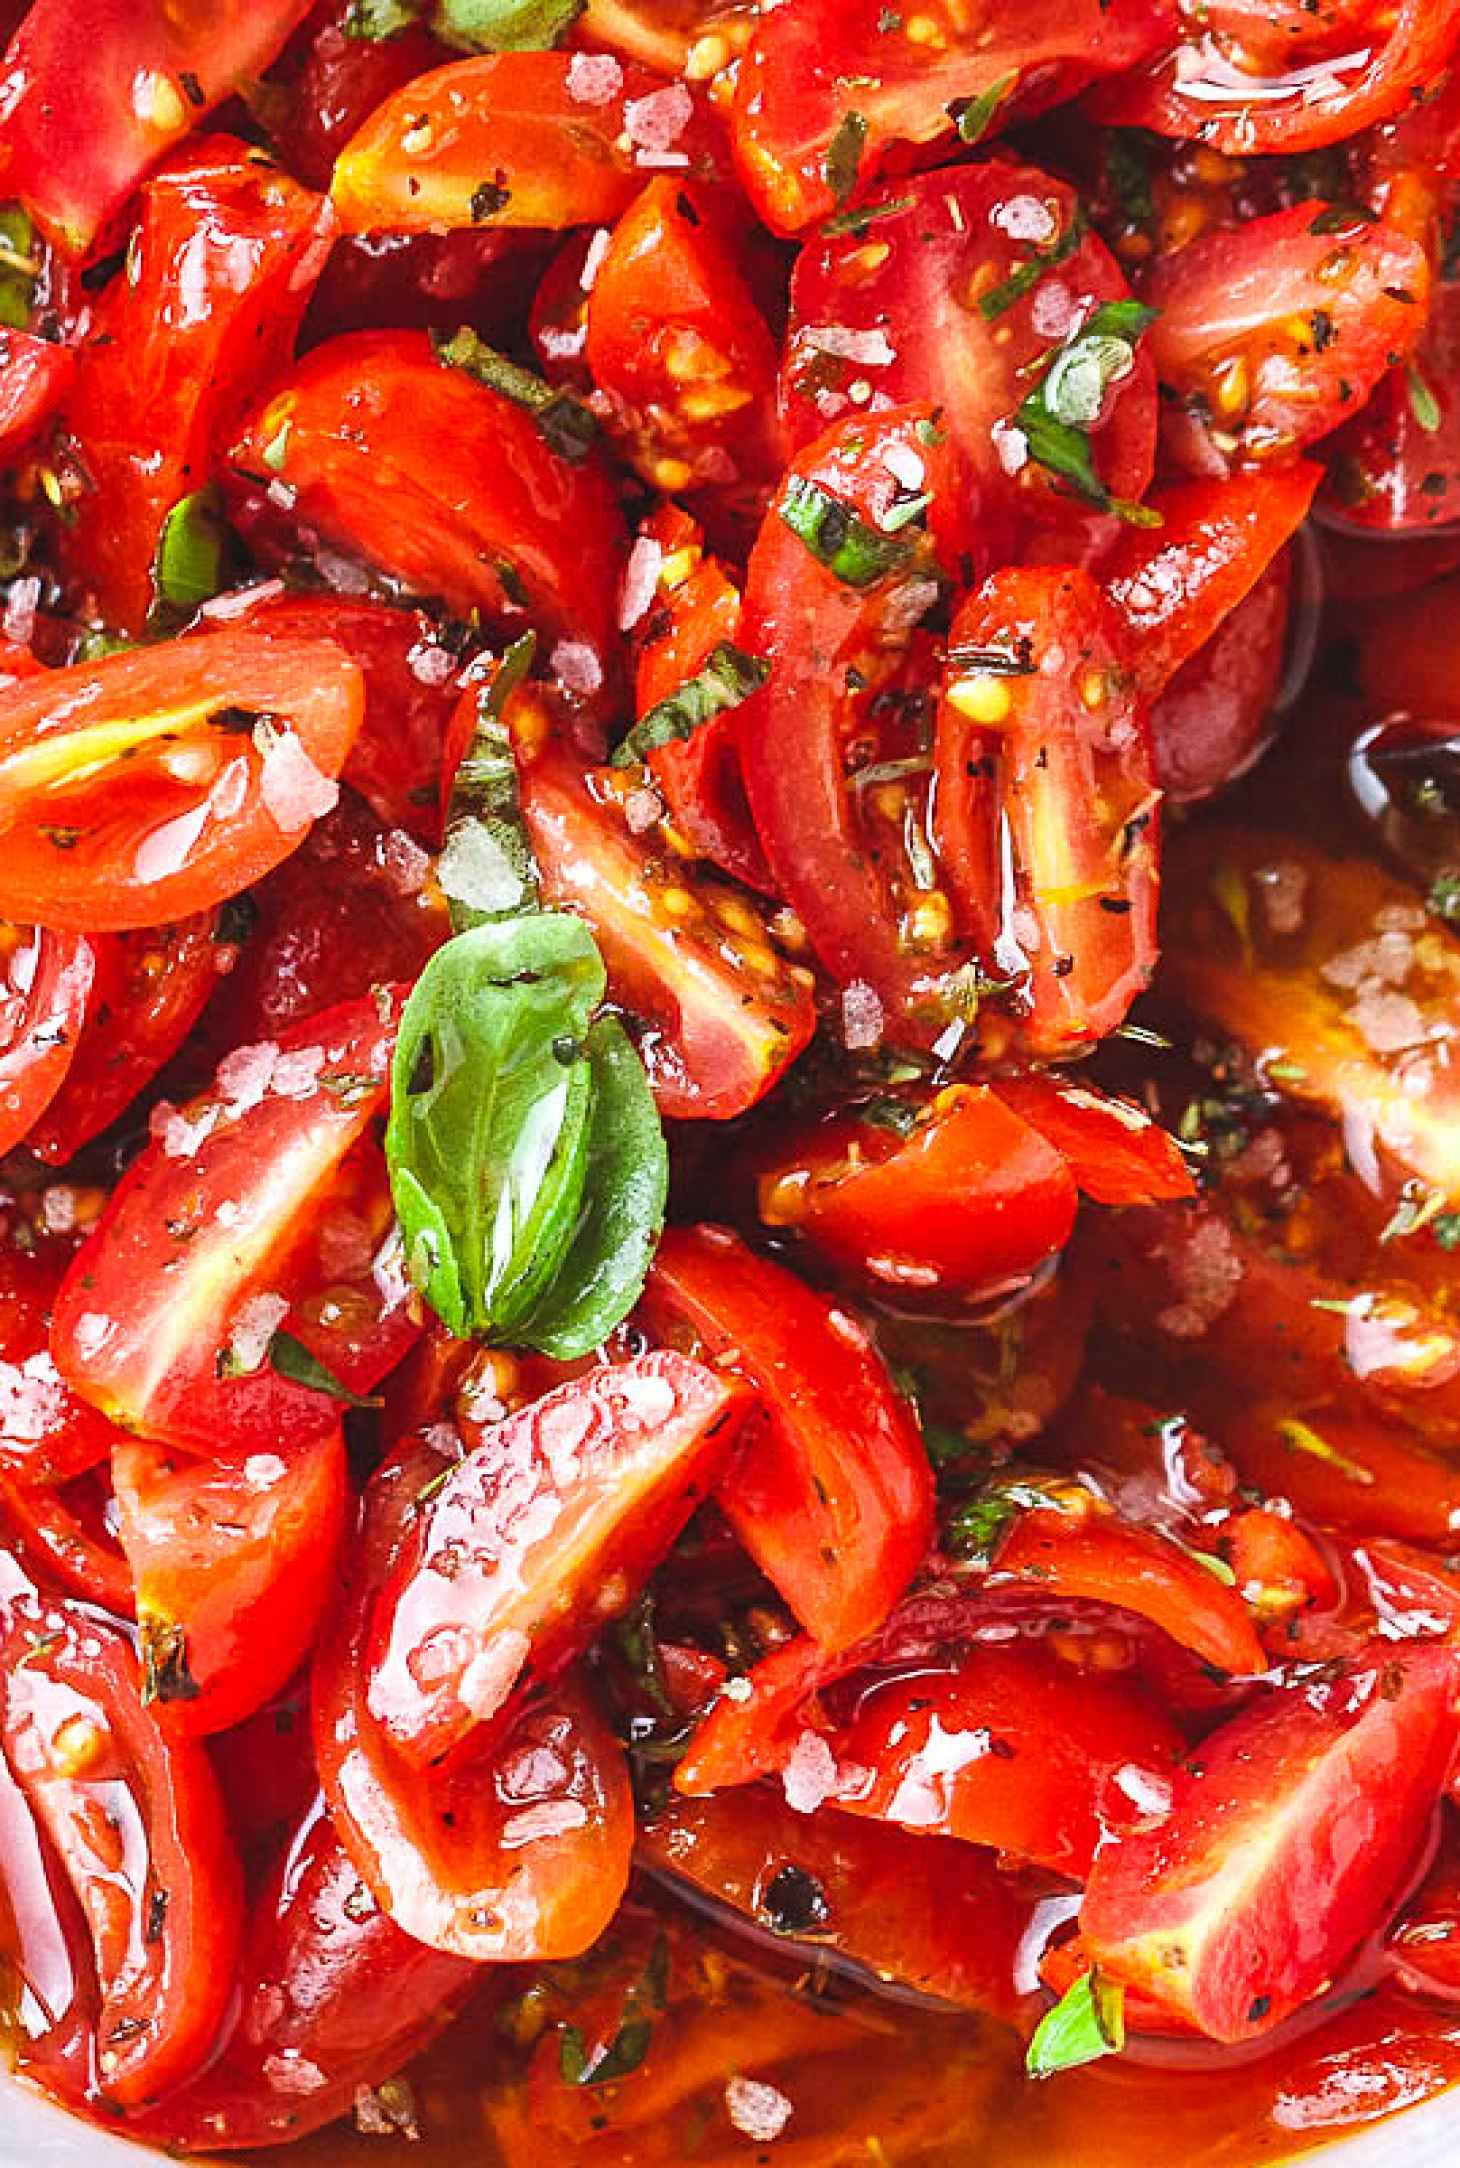 Marinated Cherry Tomato Salad - #recipe by #eatwell101 - https://www.eatwell101.com/marinated-cherry-tomato-salad-recipe